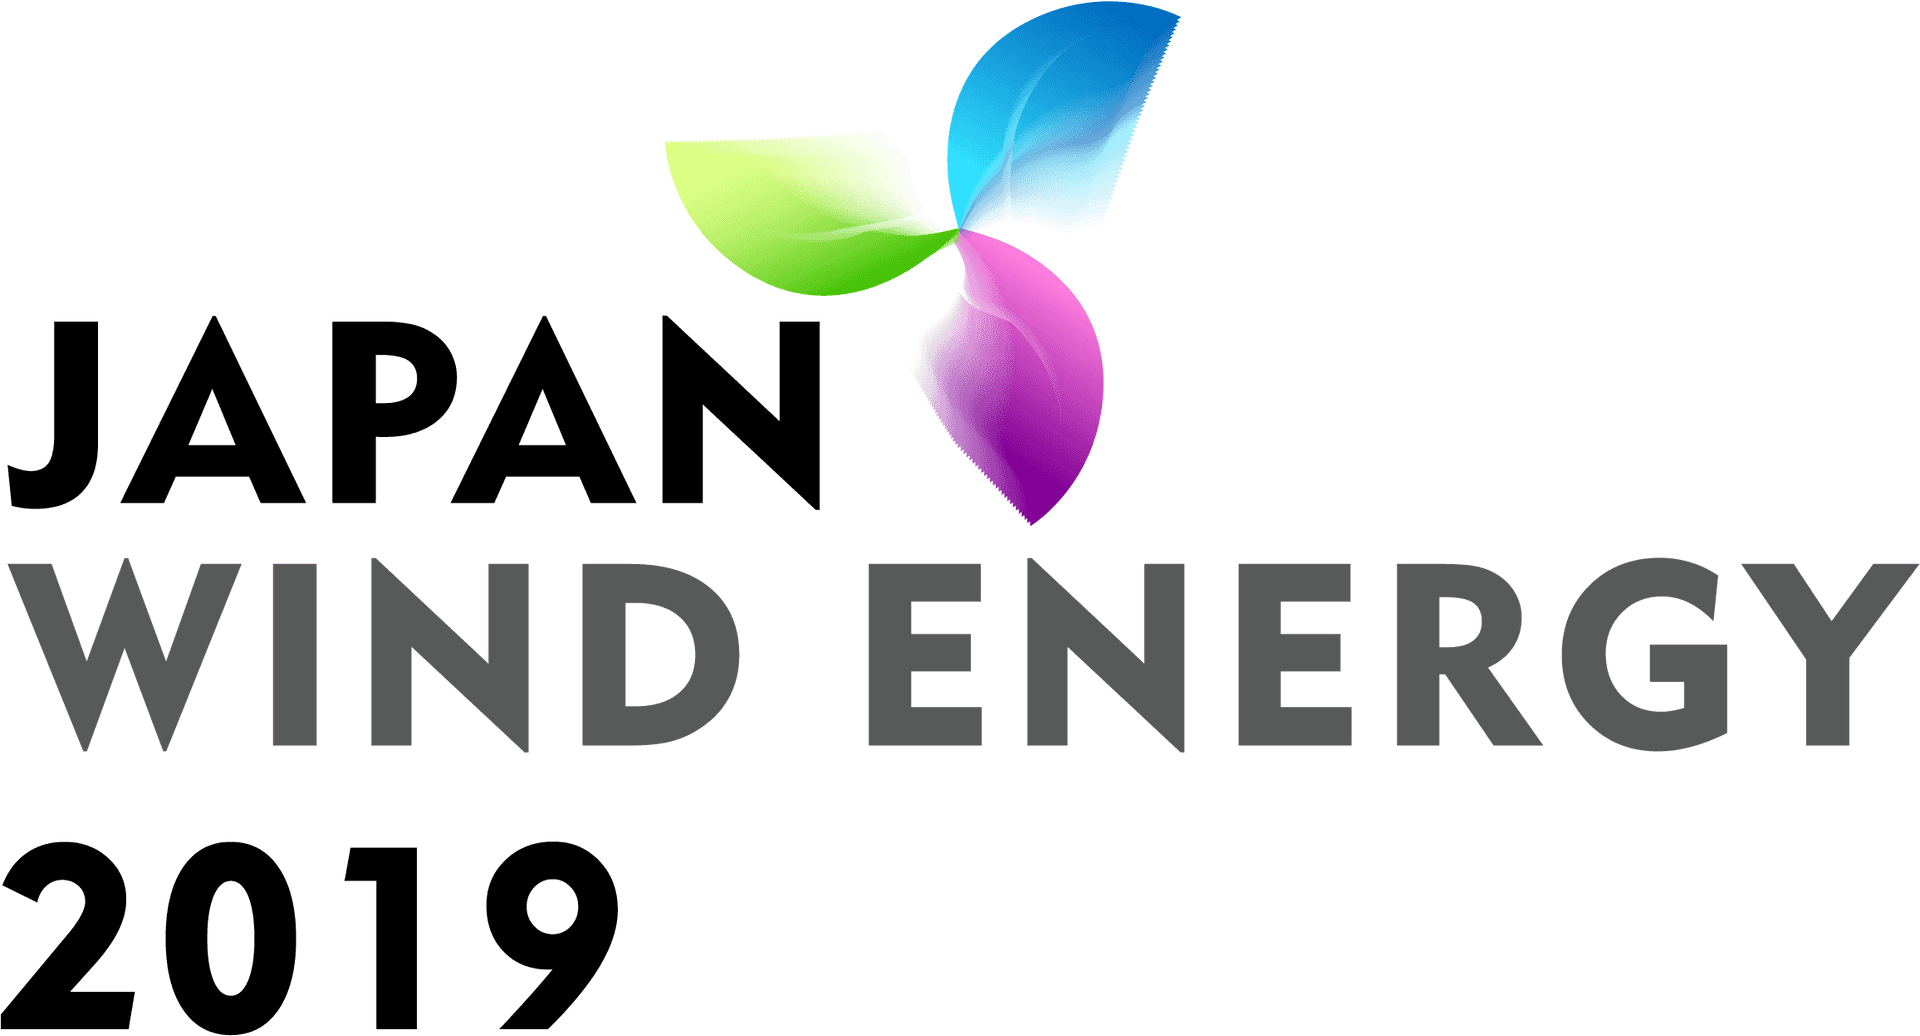 Japan Wind Energy2019 Logo PNG